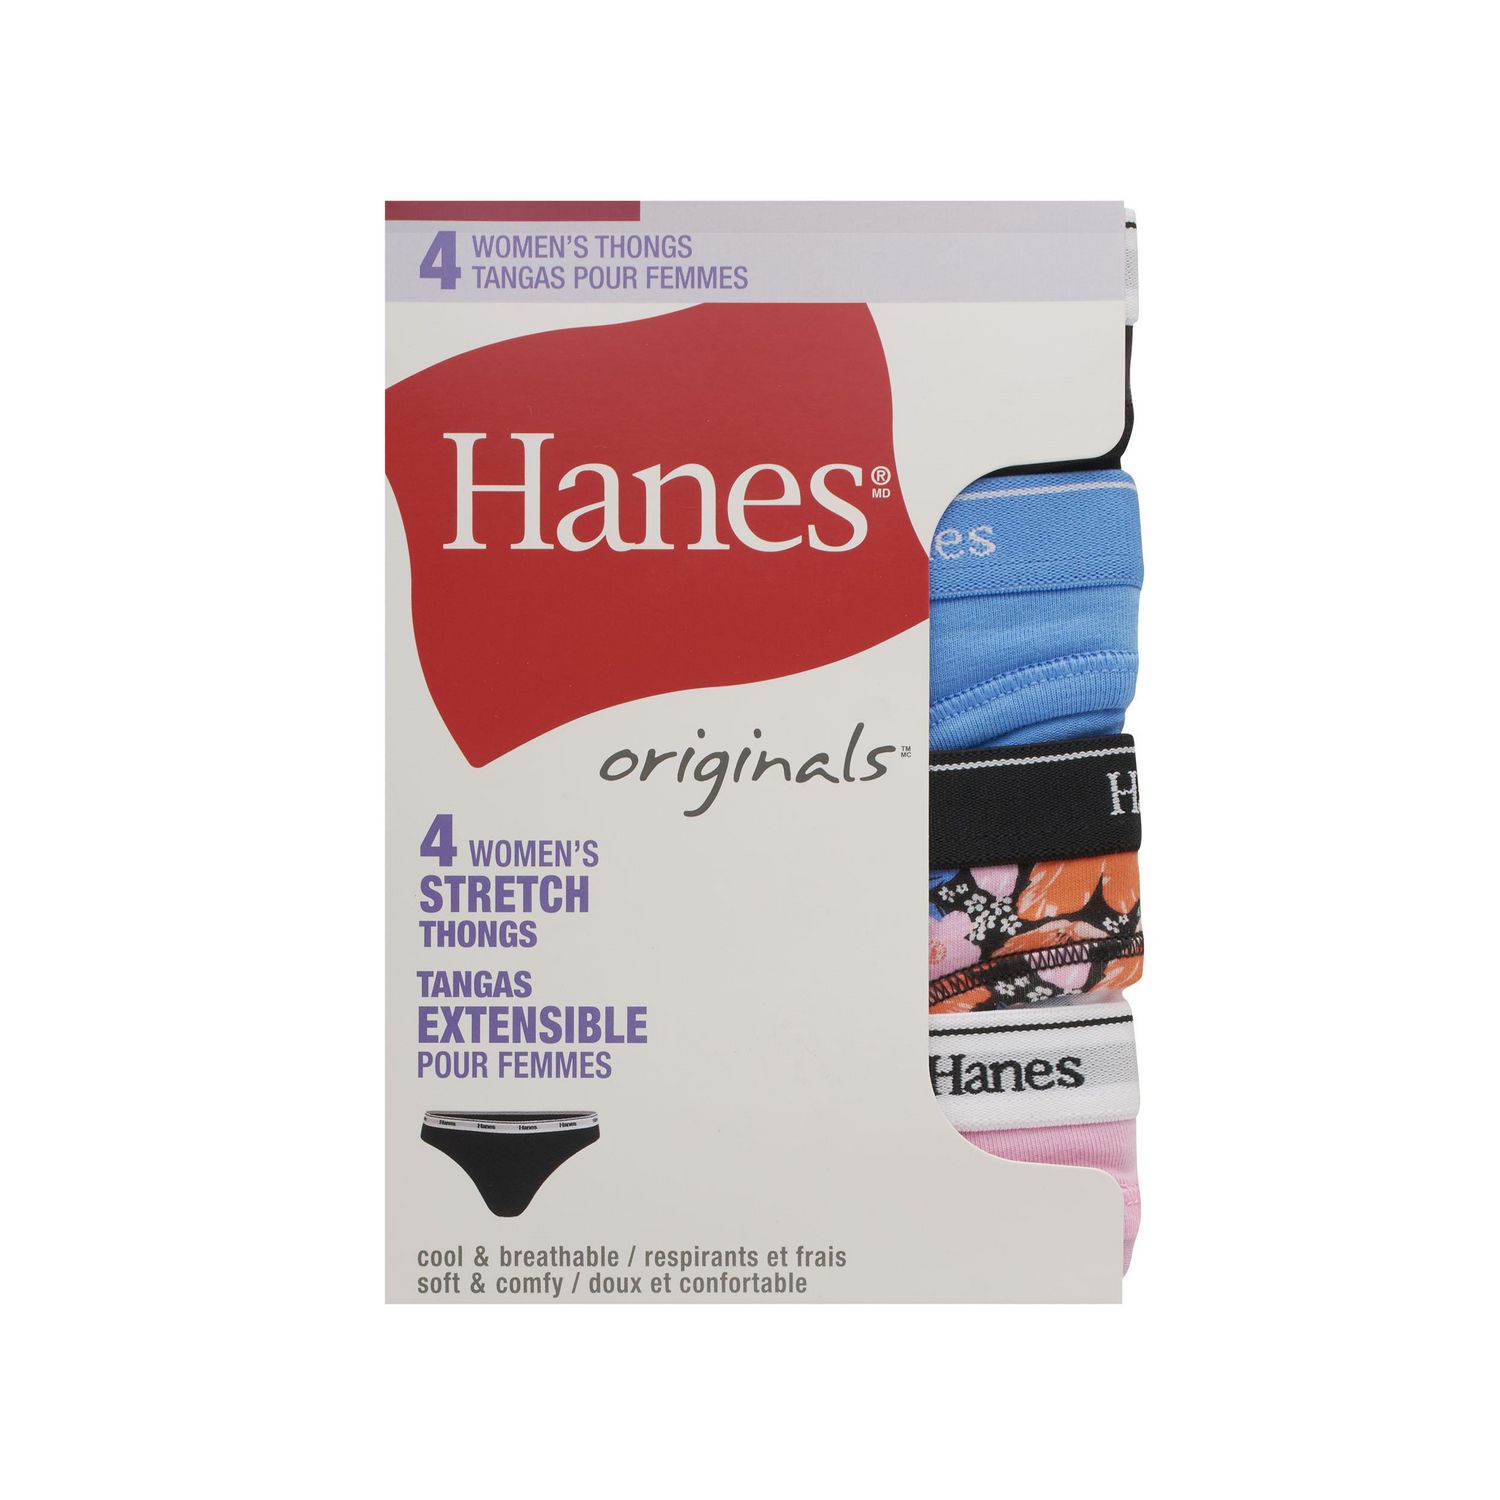 Hanes Originals Women's Stretch Thongs, pack of 4 